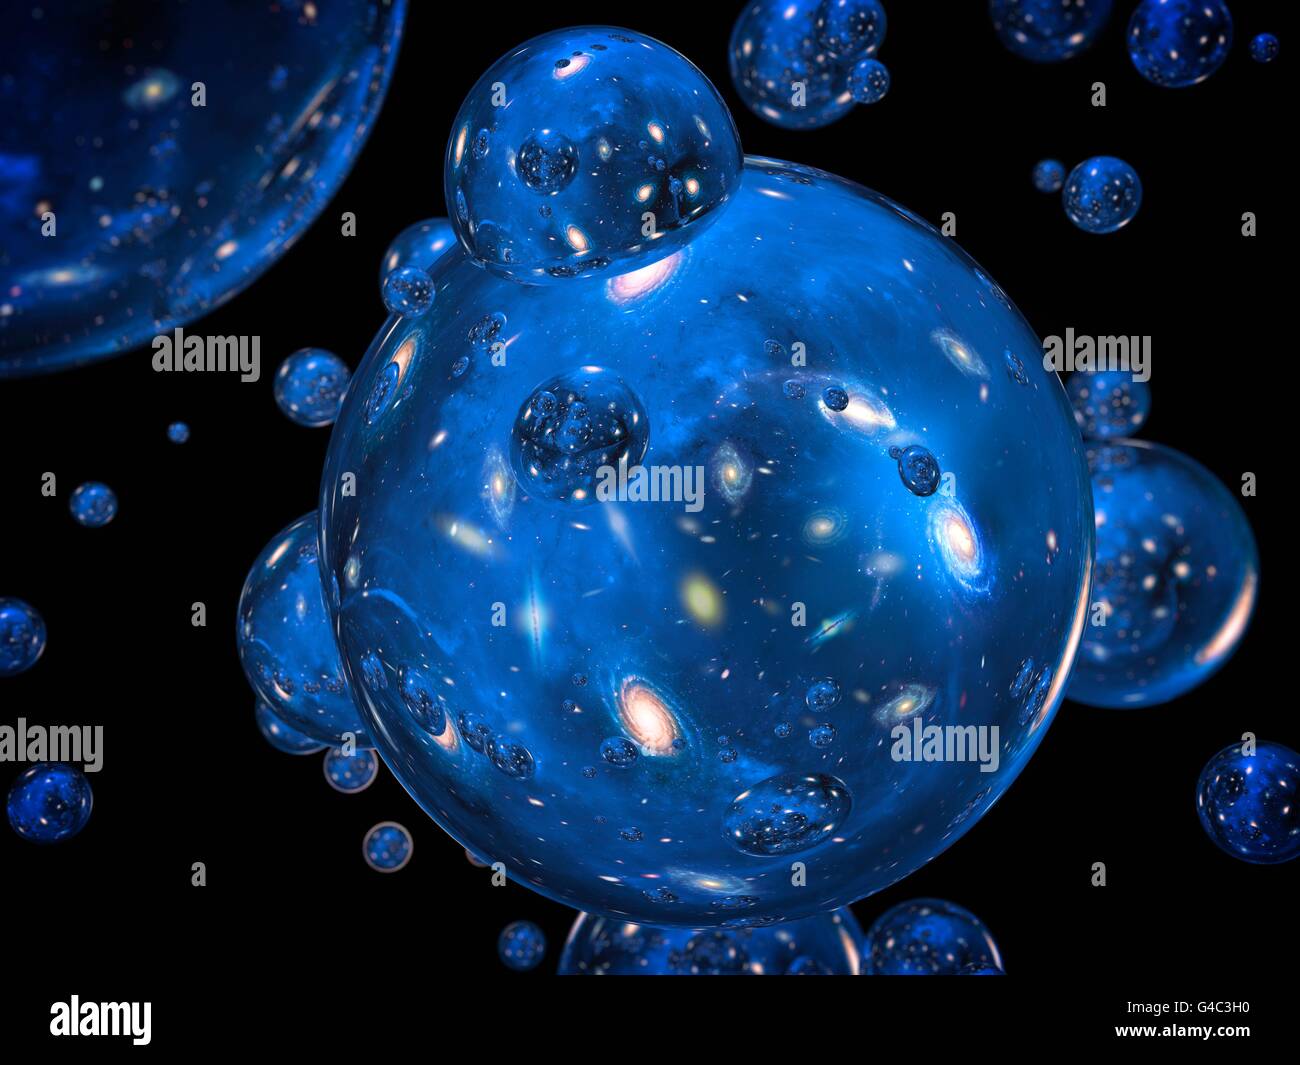 Universos Burbuja Equipo Ilustracion De Multiples Universos